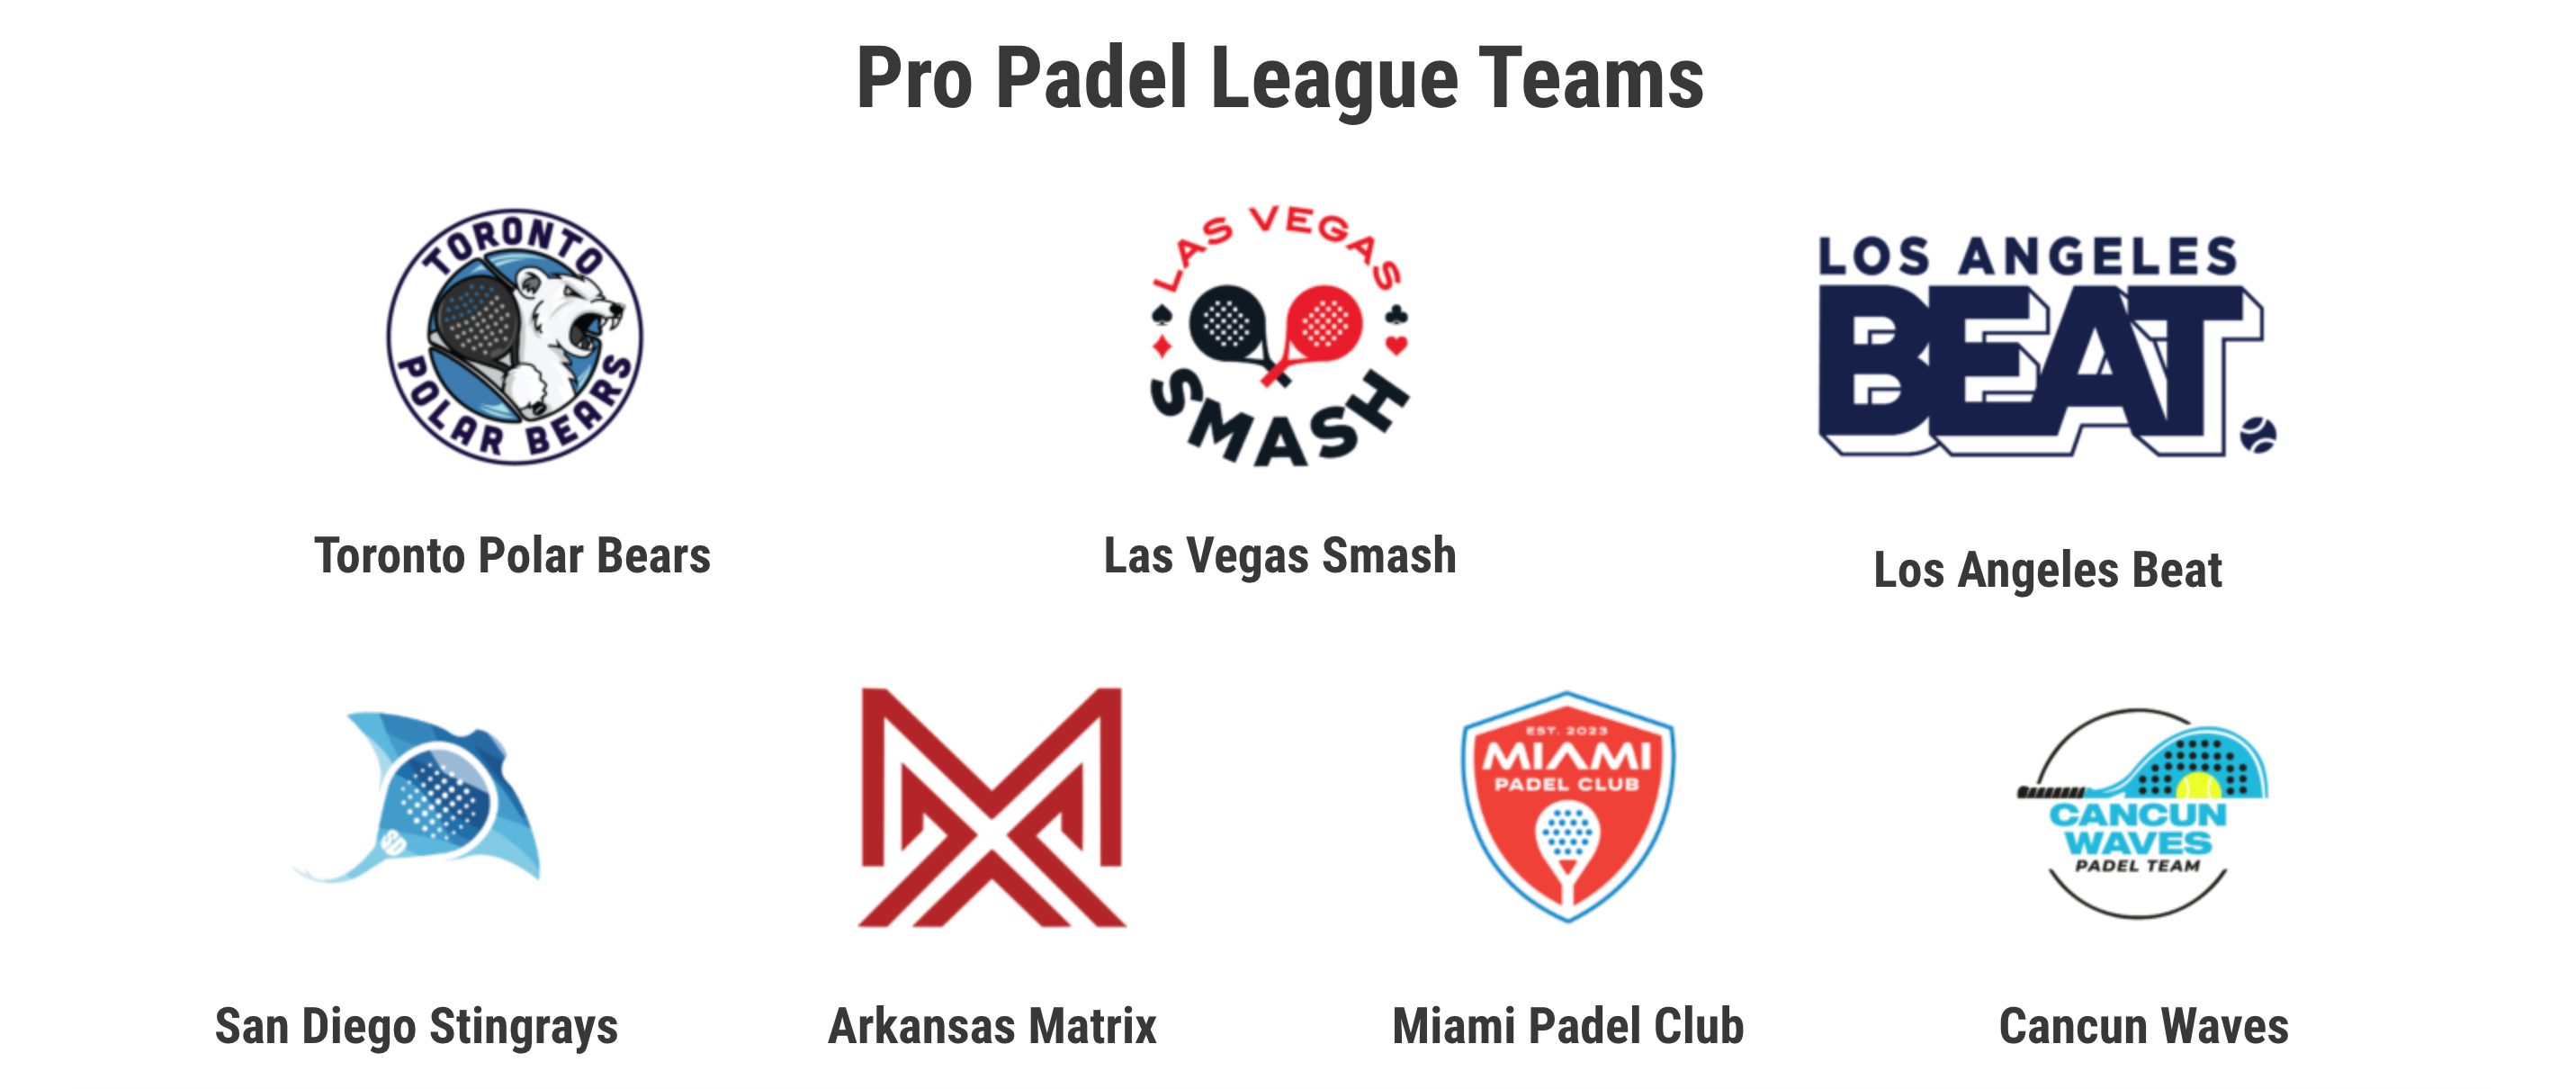 Die Pro Padel League (PPL) - Nordamerikas erste professionelle Padel-Liga